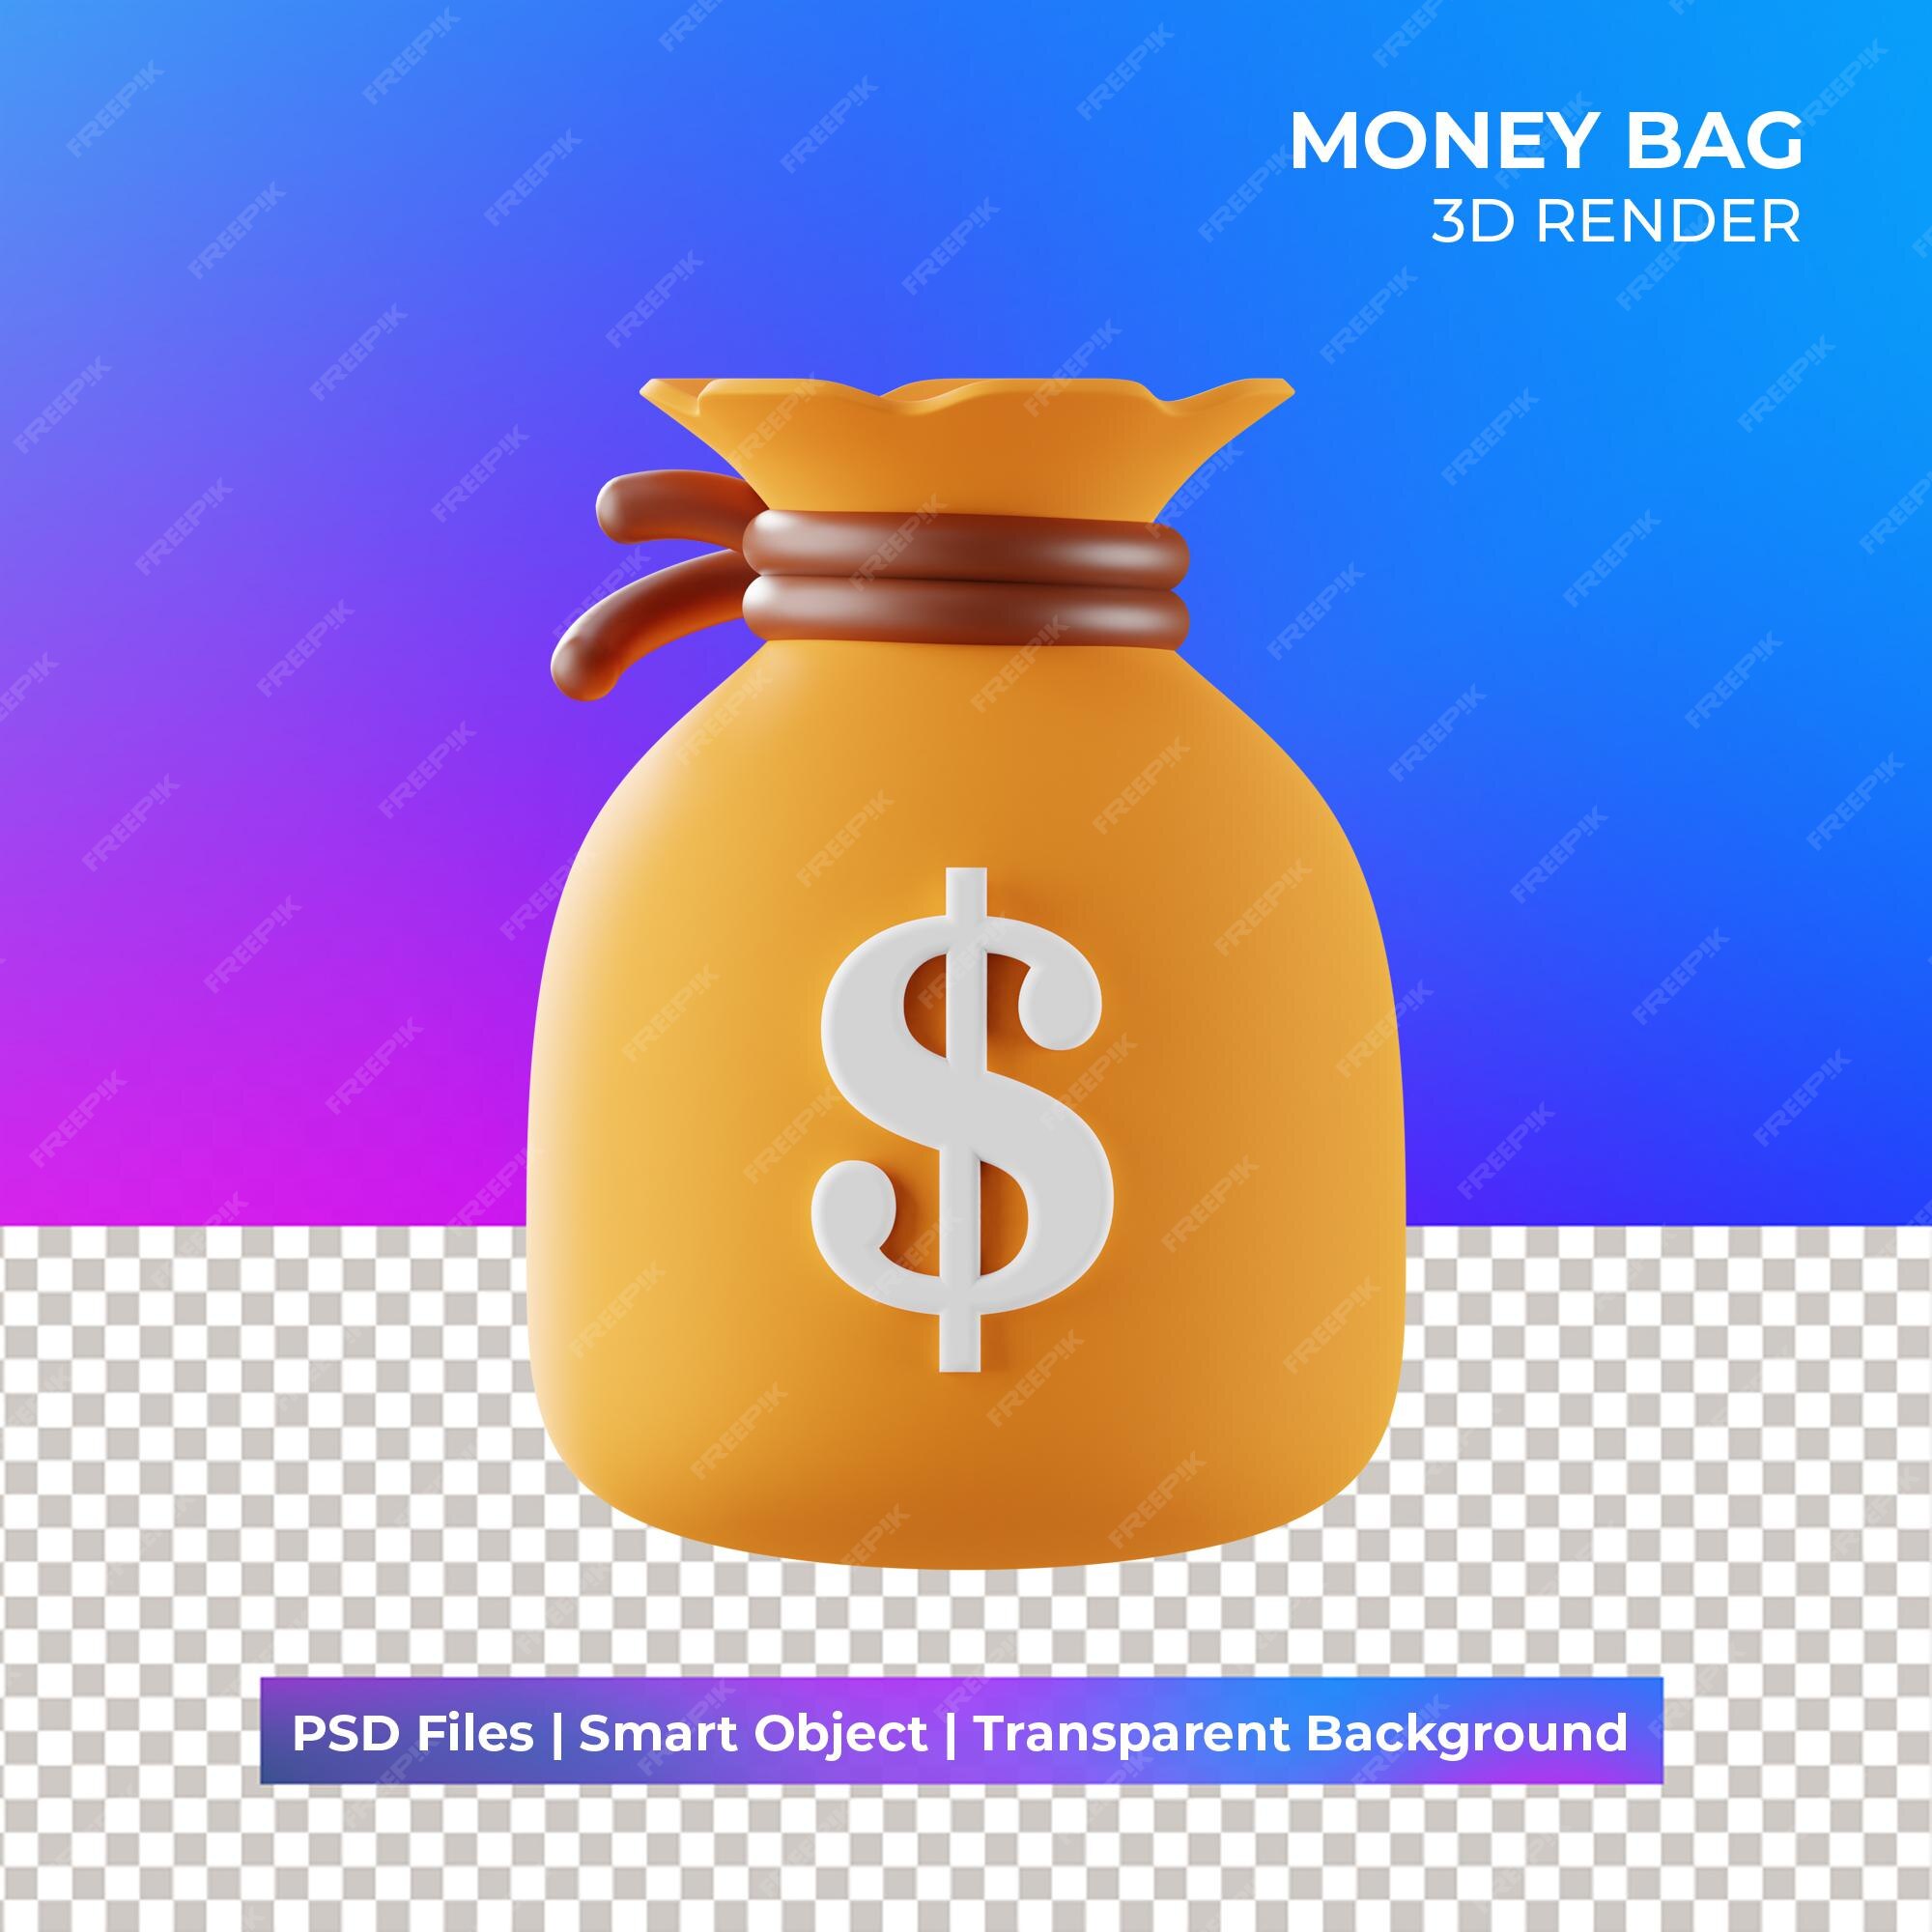 Premium PSD  Money bag rewards front view 3d rendering icon illustration  on transparent background